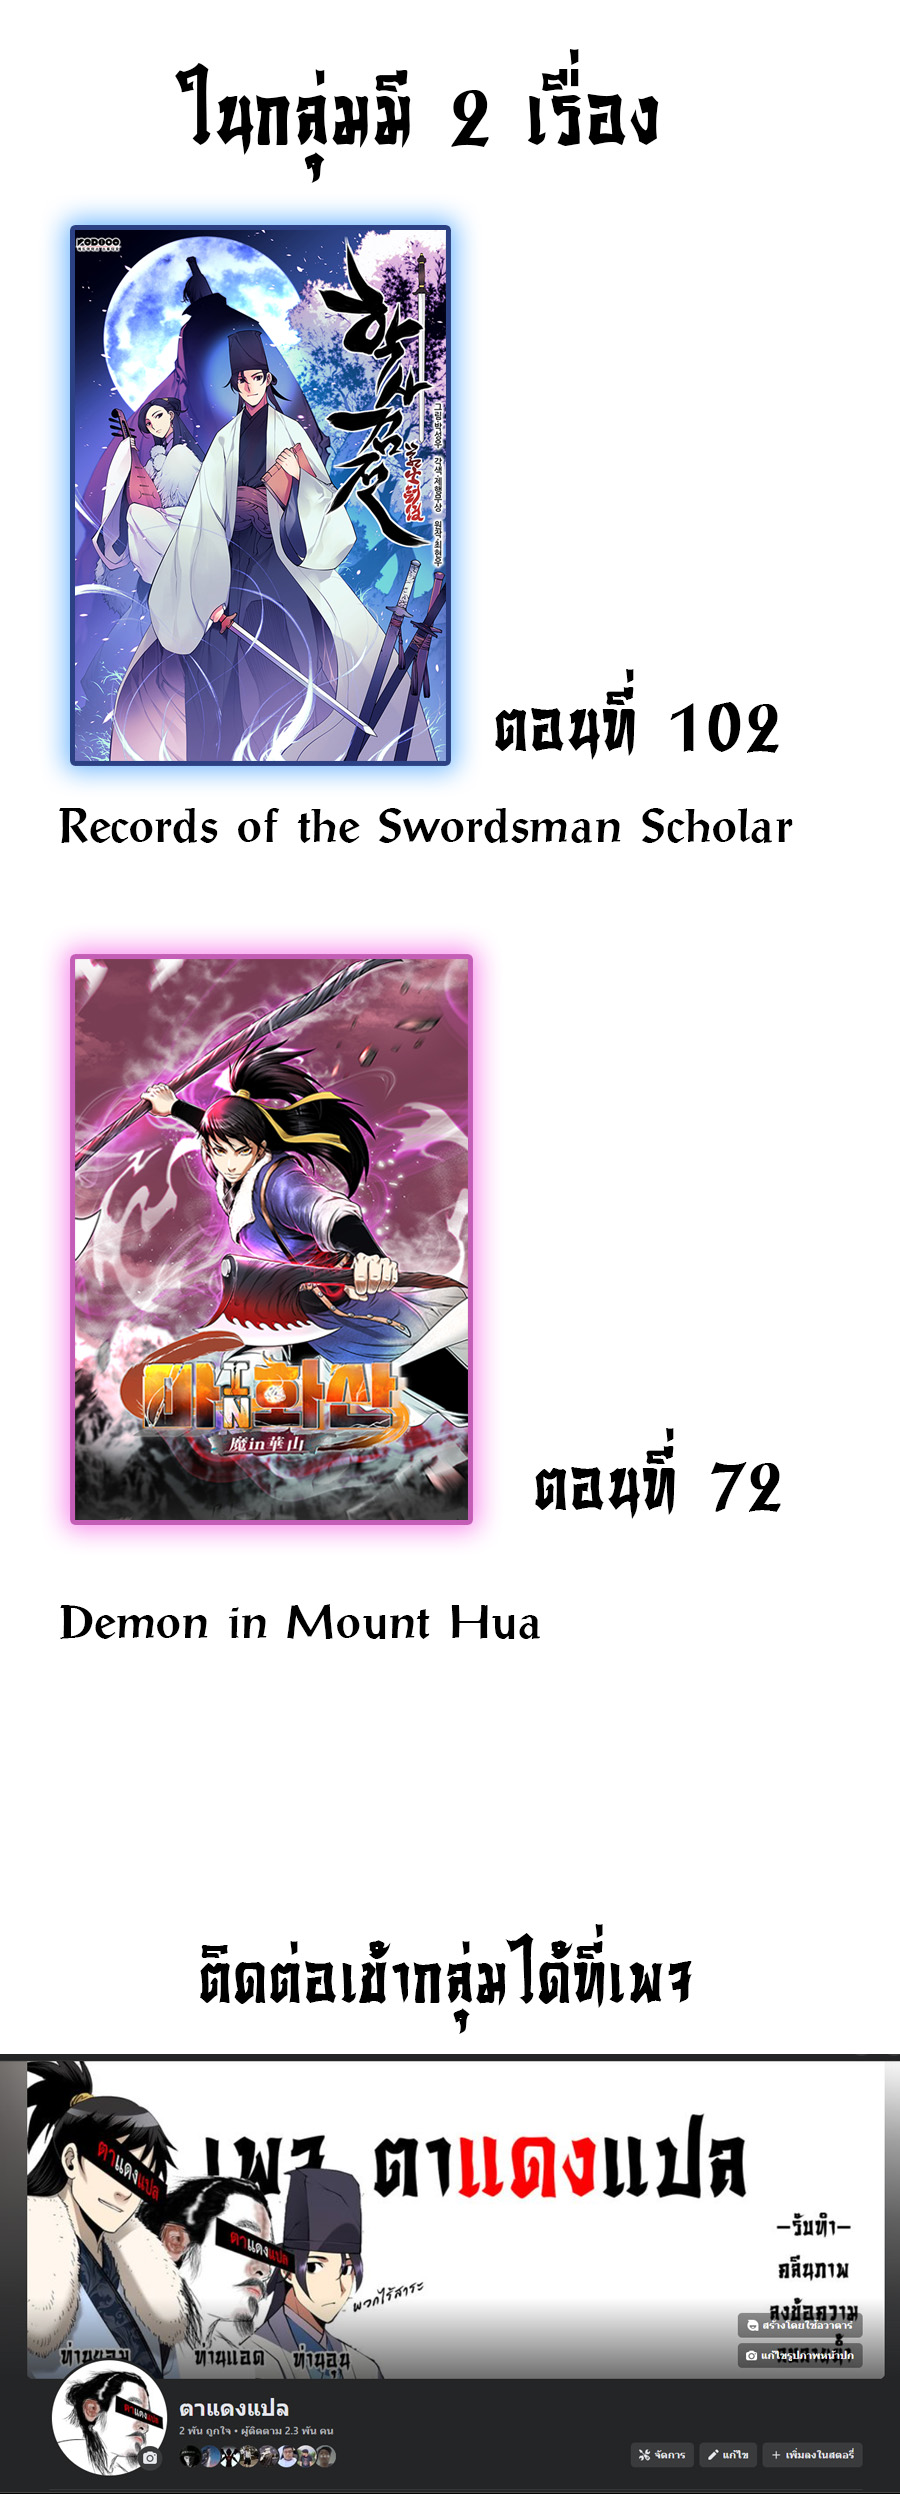 Records of the Swordsman Scholar 82 (16)